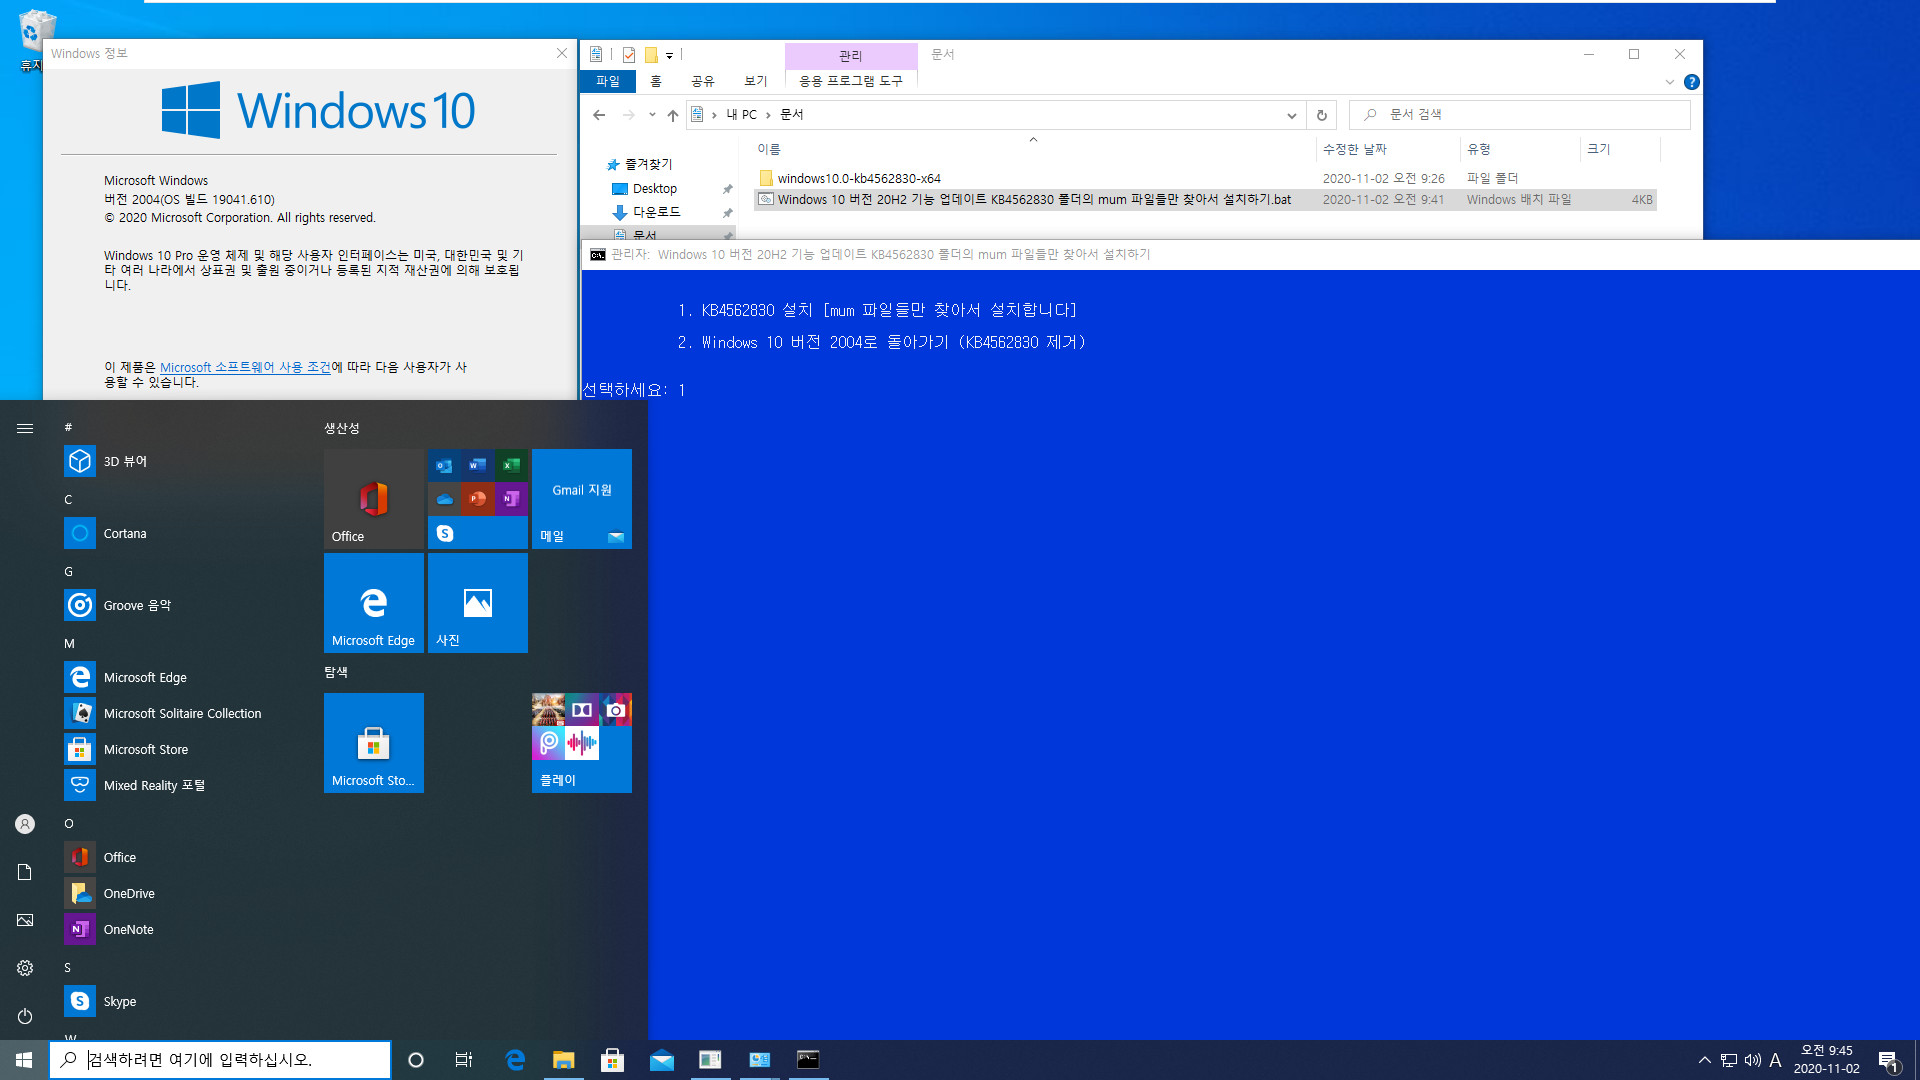 Windows 10 버전 20H2 기능 업데이트 KB4562830 폴더의 mum 파일들만 찾아서 설치하기.bat - 크로미엄 엣지 설치하지 않고 버전 20H2만 설치하기 테스트 2020-11-02_094528.jpg